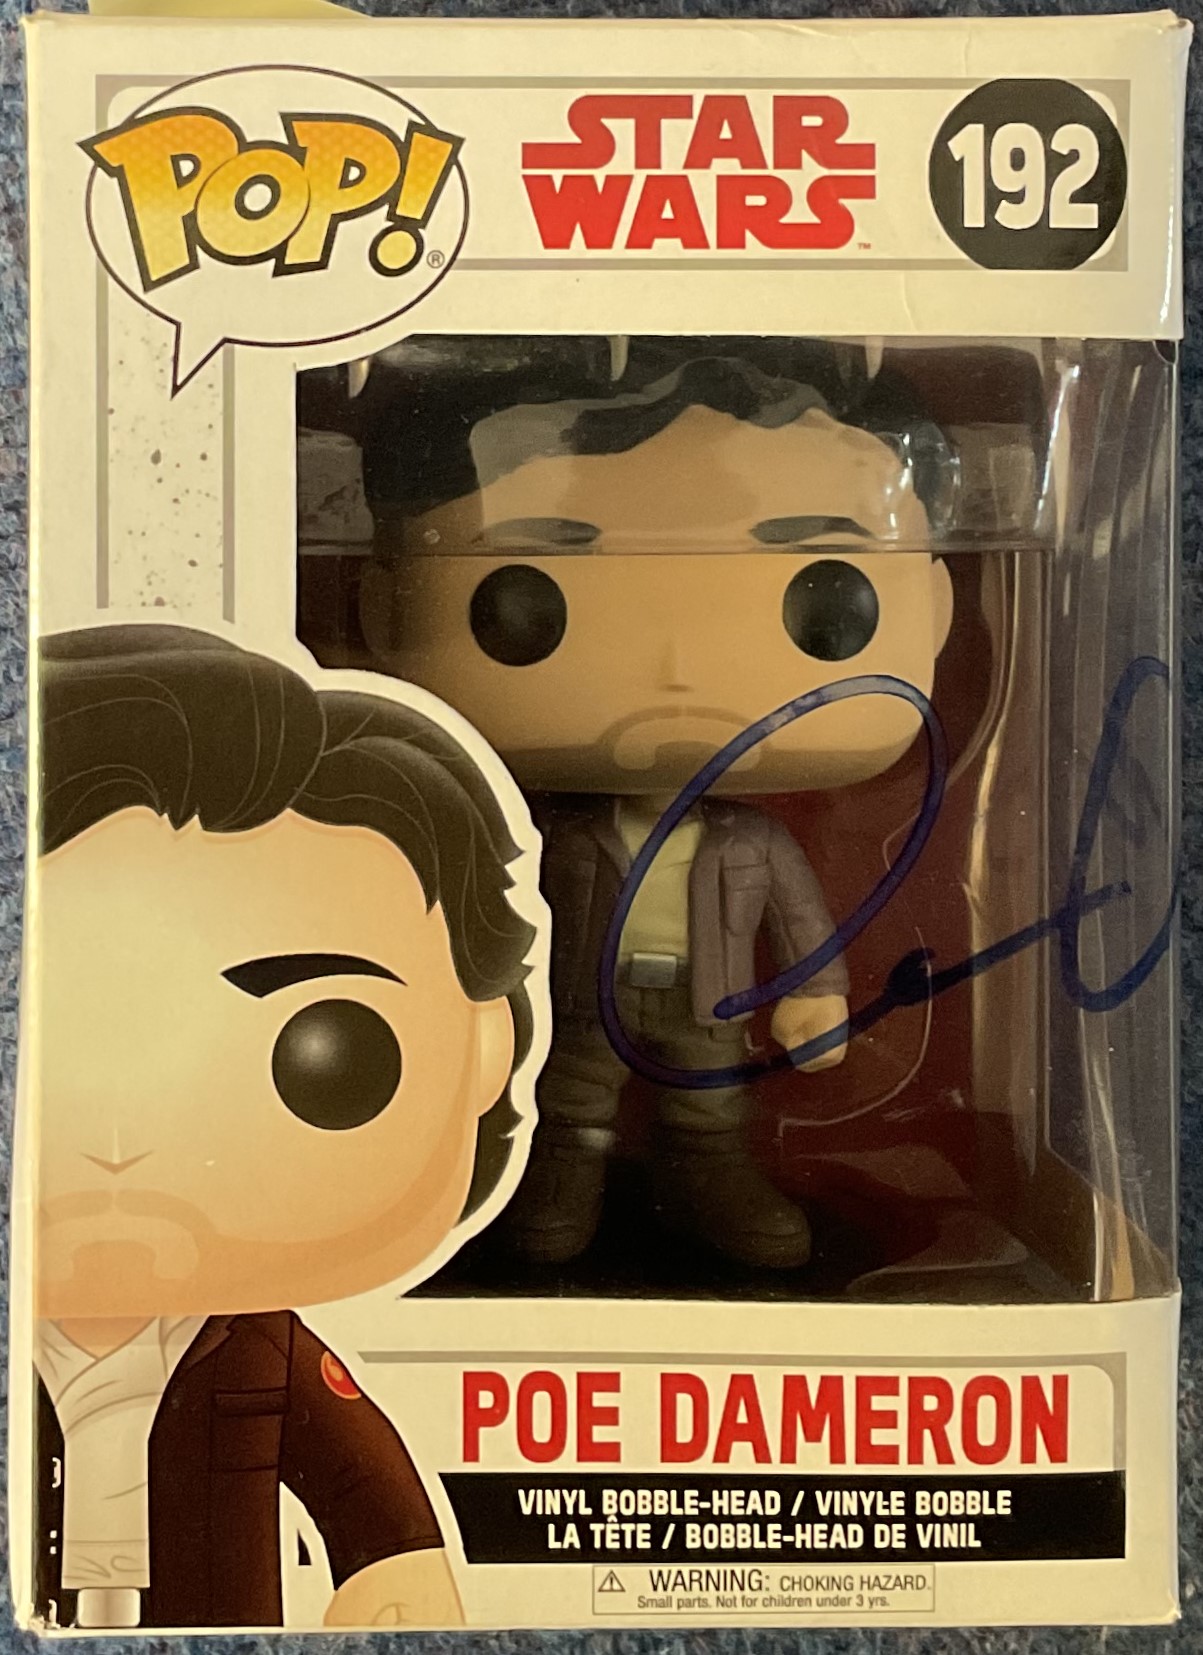 Oscar Isaac signed Poe Dameron Star Wars Vinyl Bobble Head Model signature on box. . Good Condition.